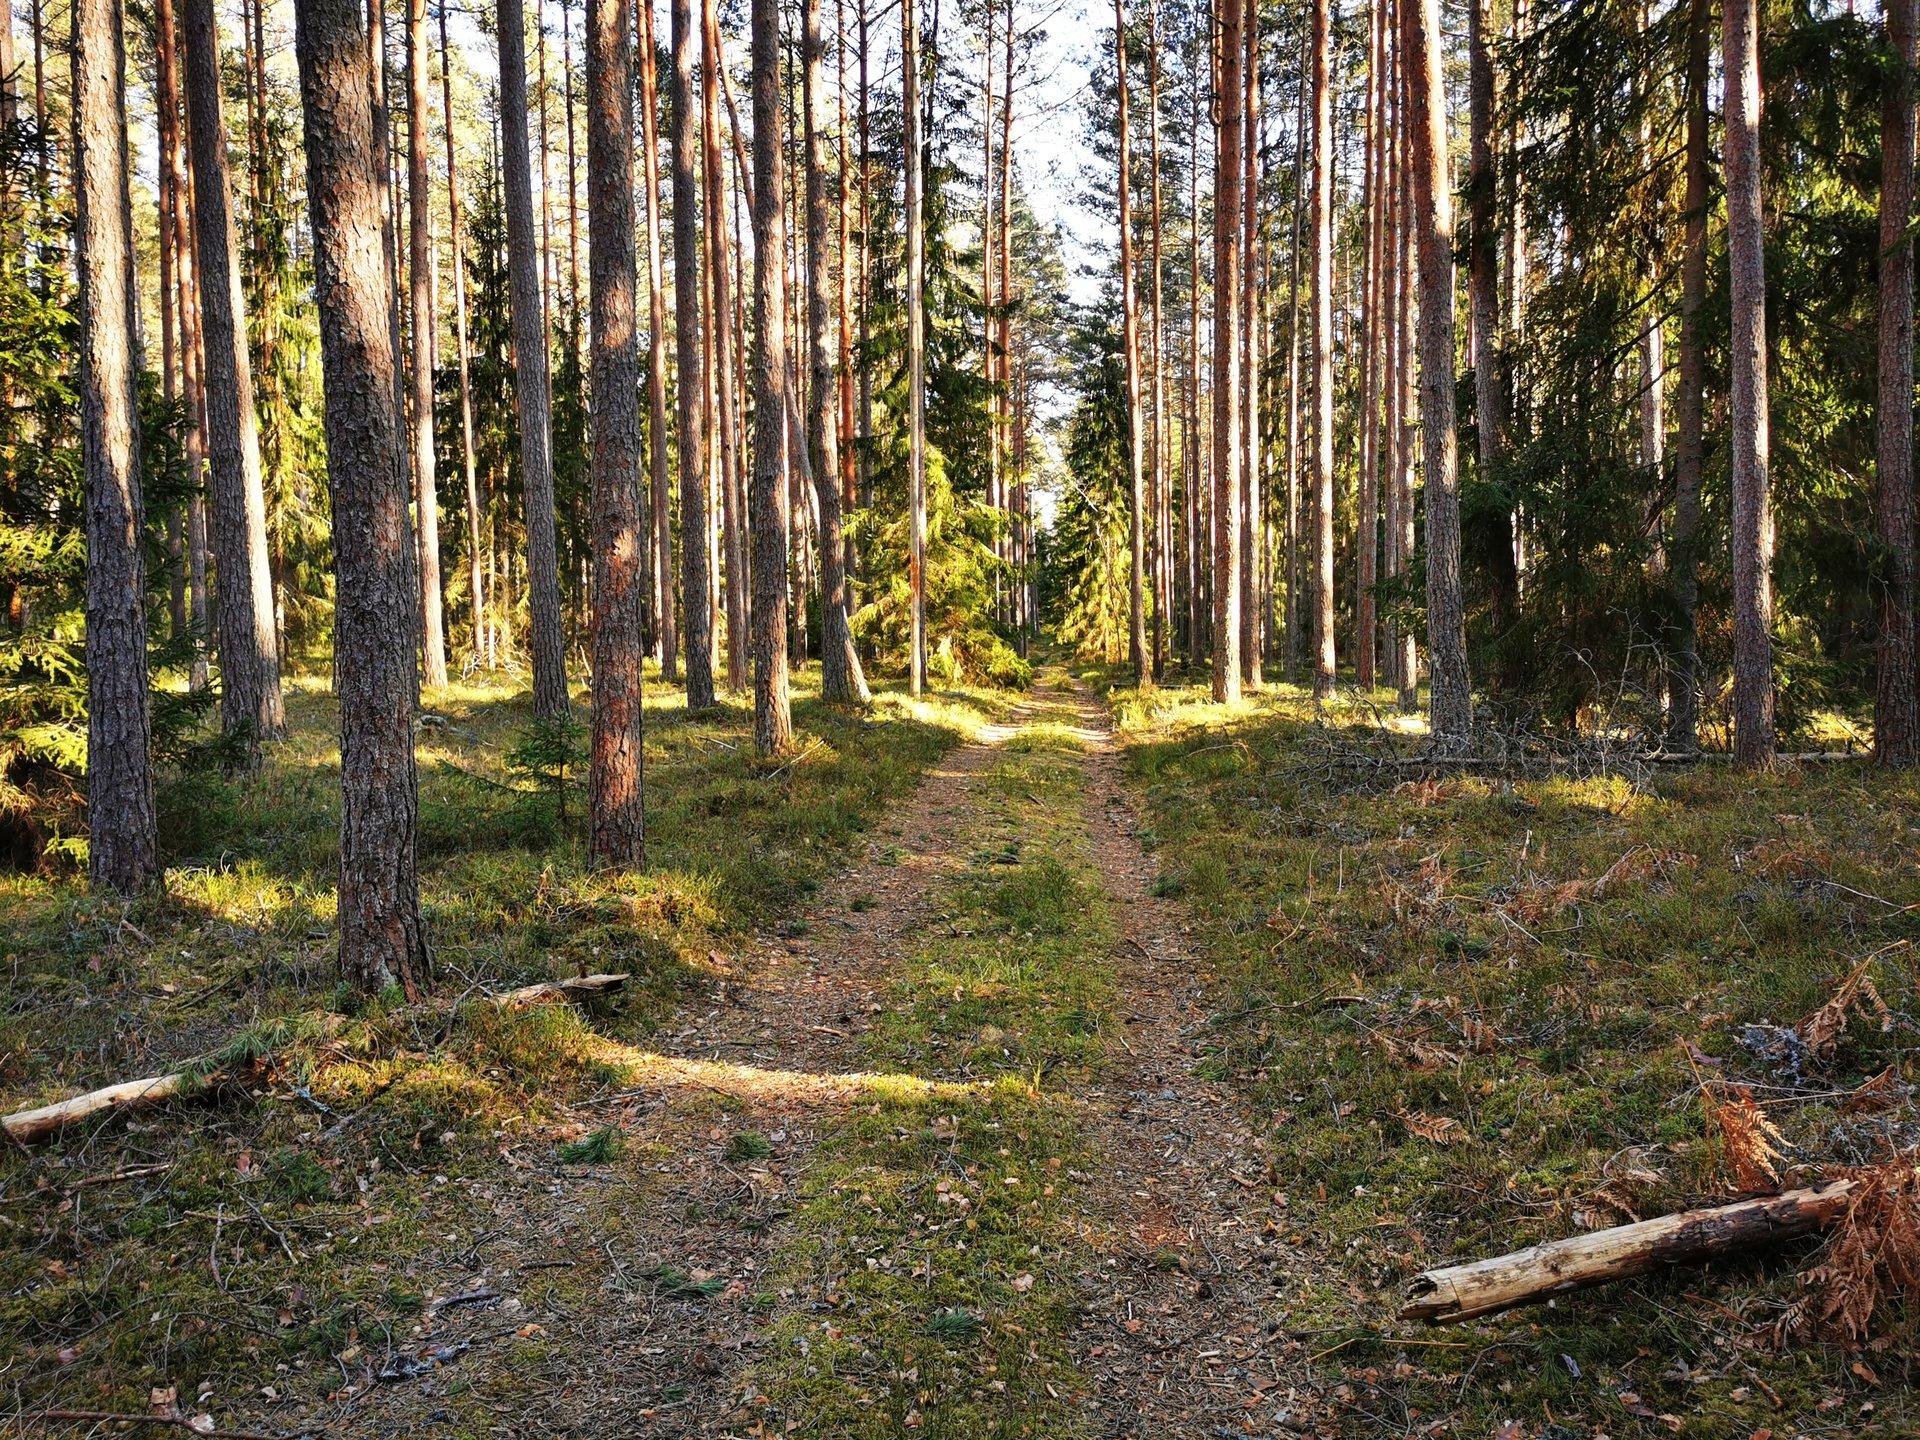 RMK Kolga nature study trail